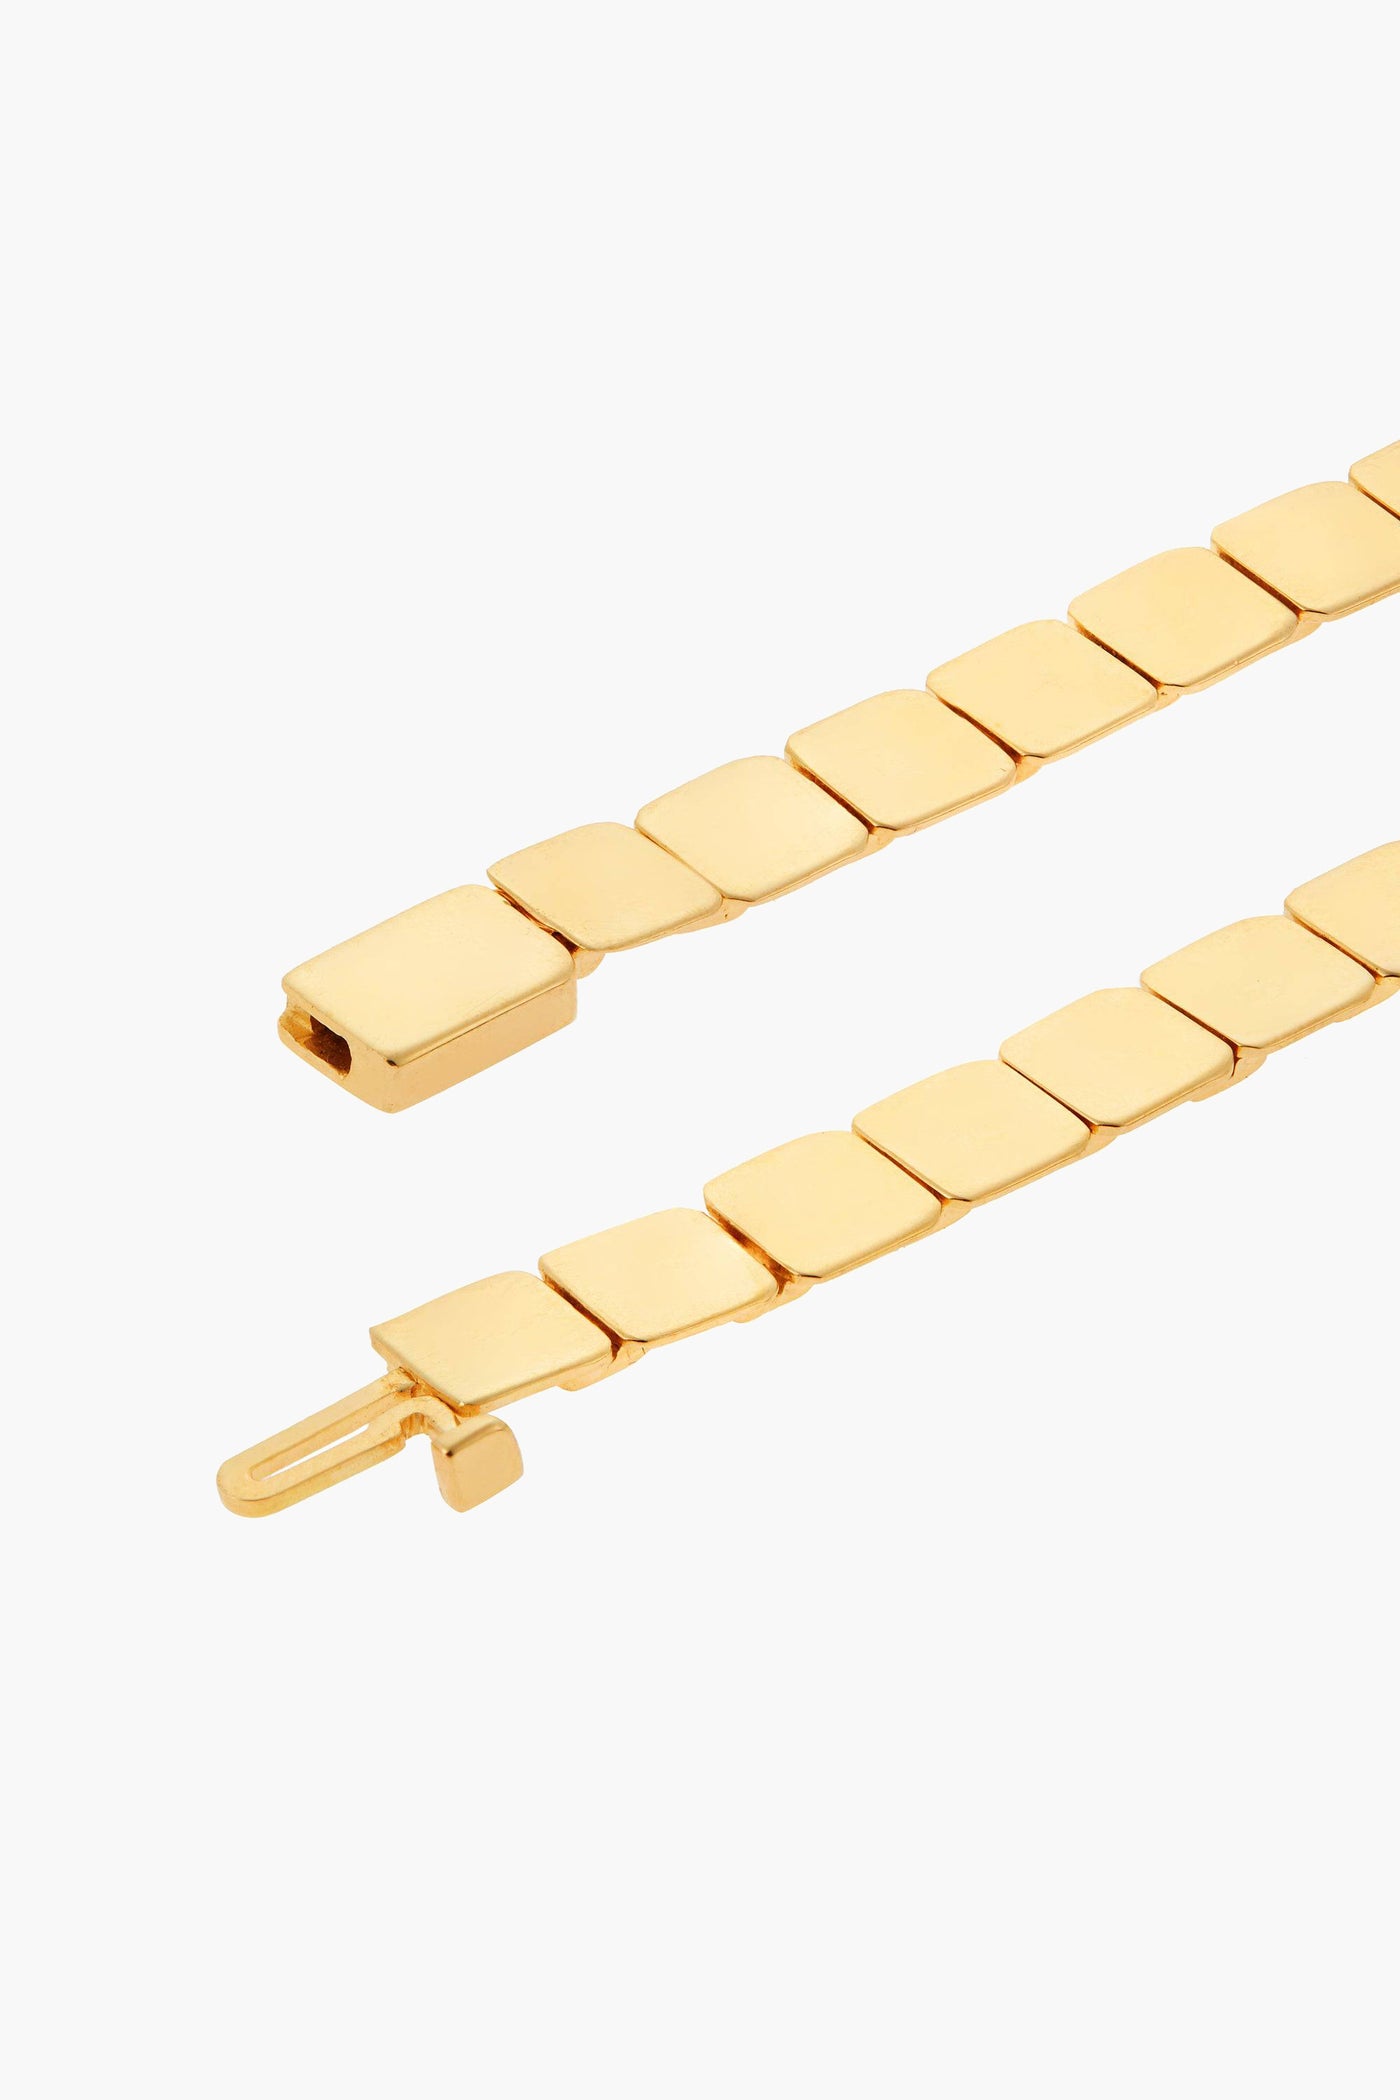 Ileana-Makri-18K-Yellow-Gold-Medium-Tile-Bracelet-Amarees